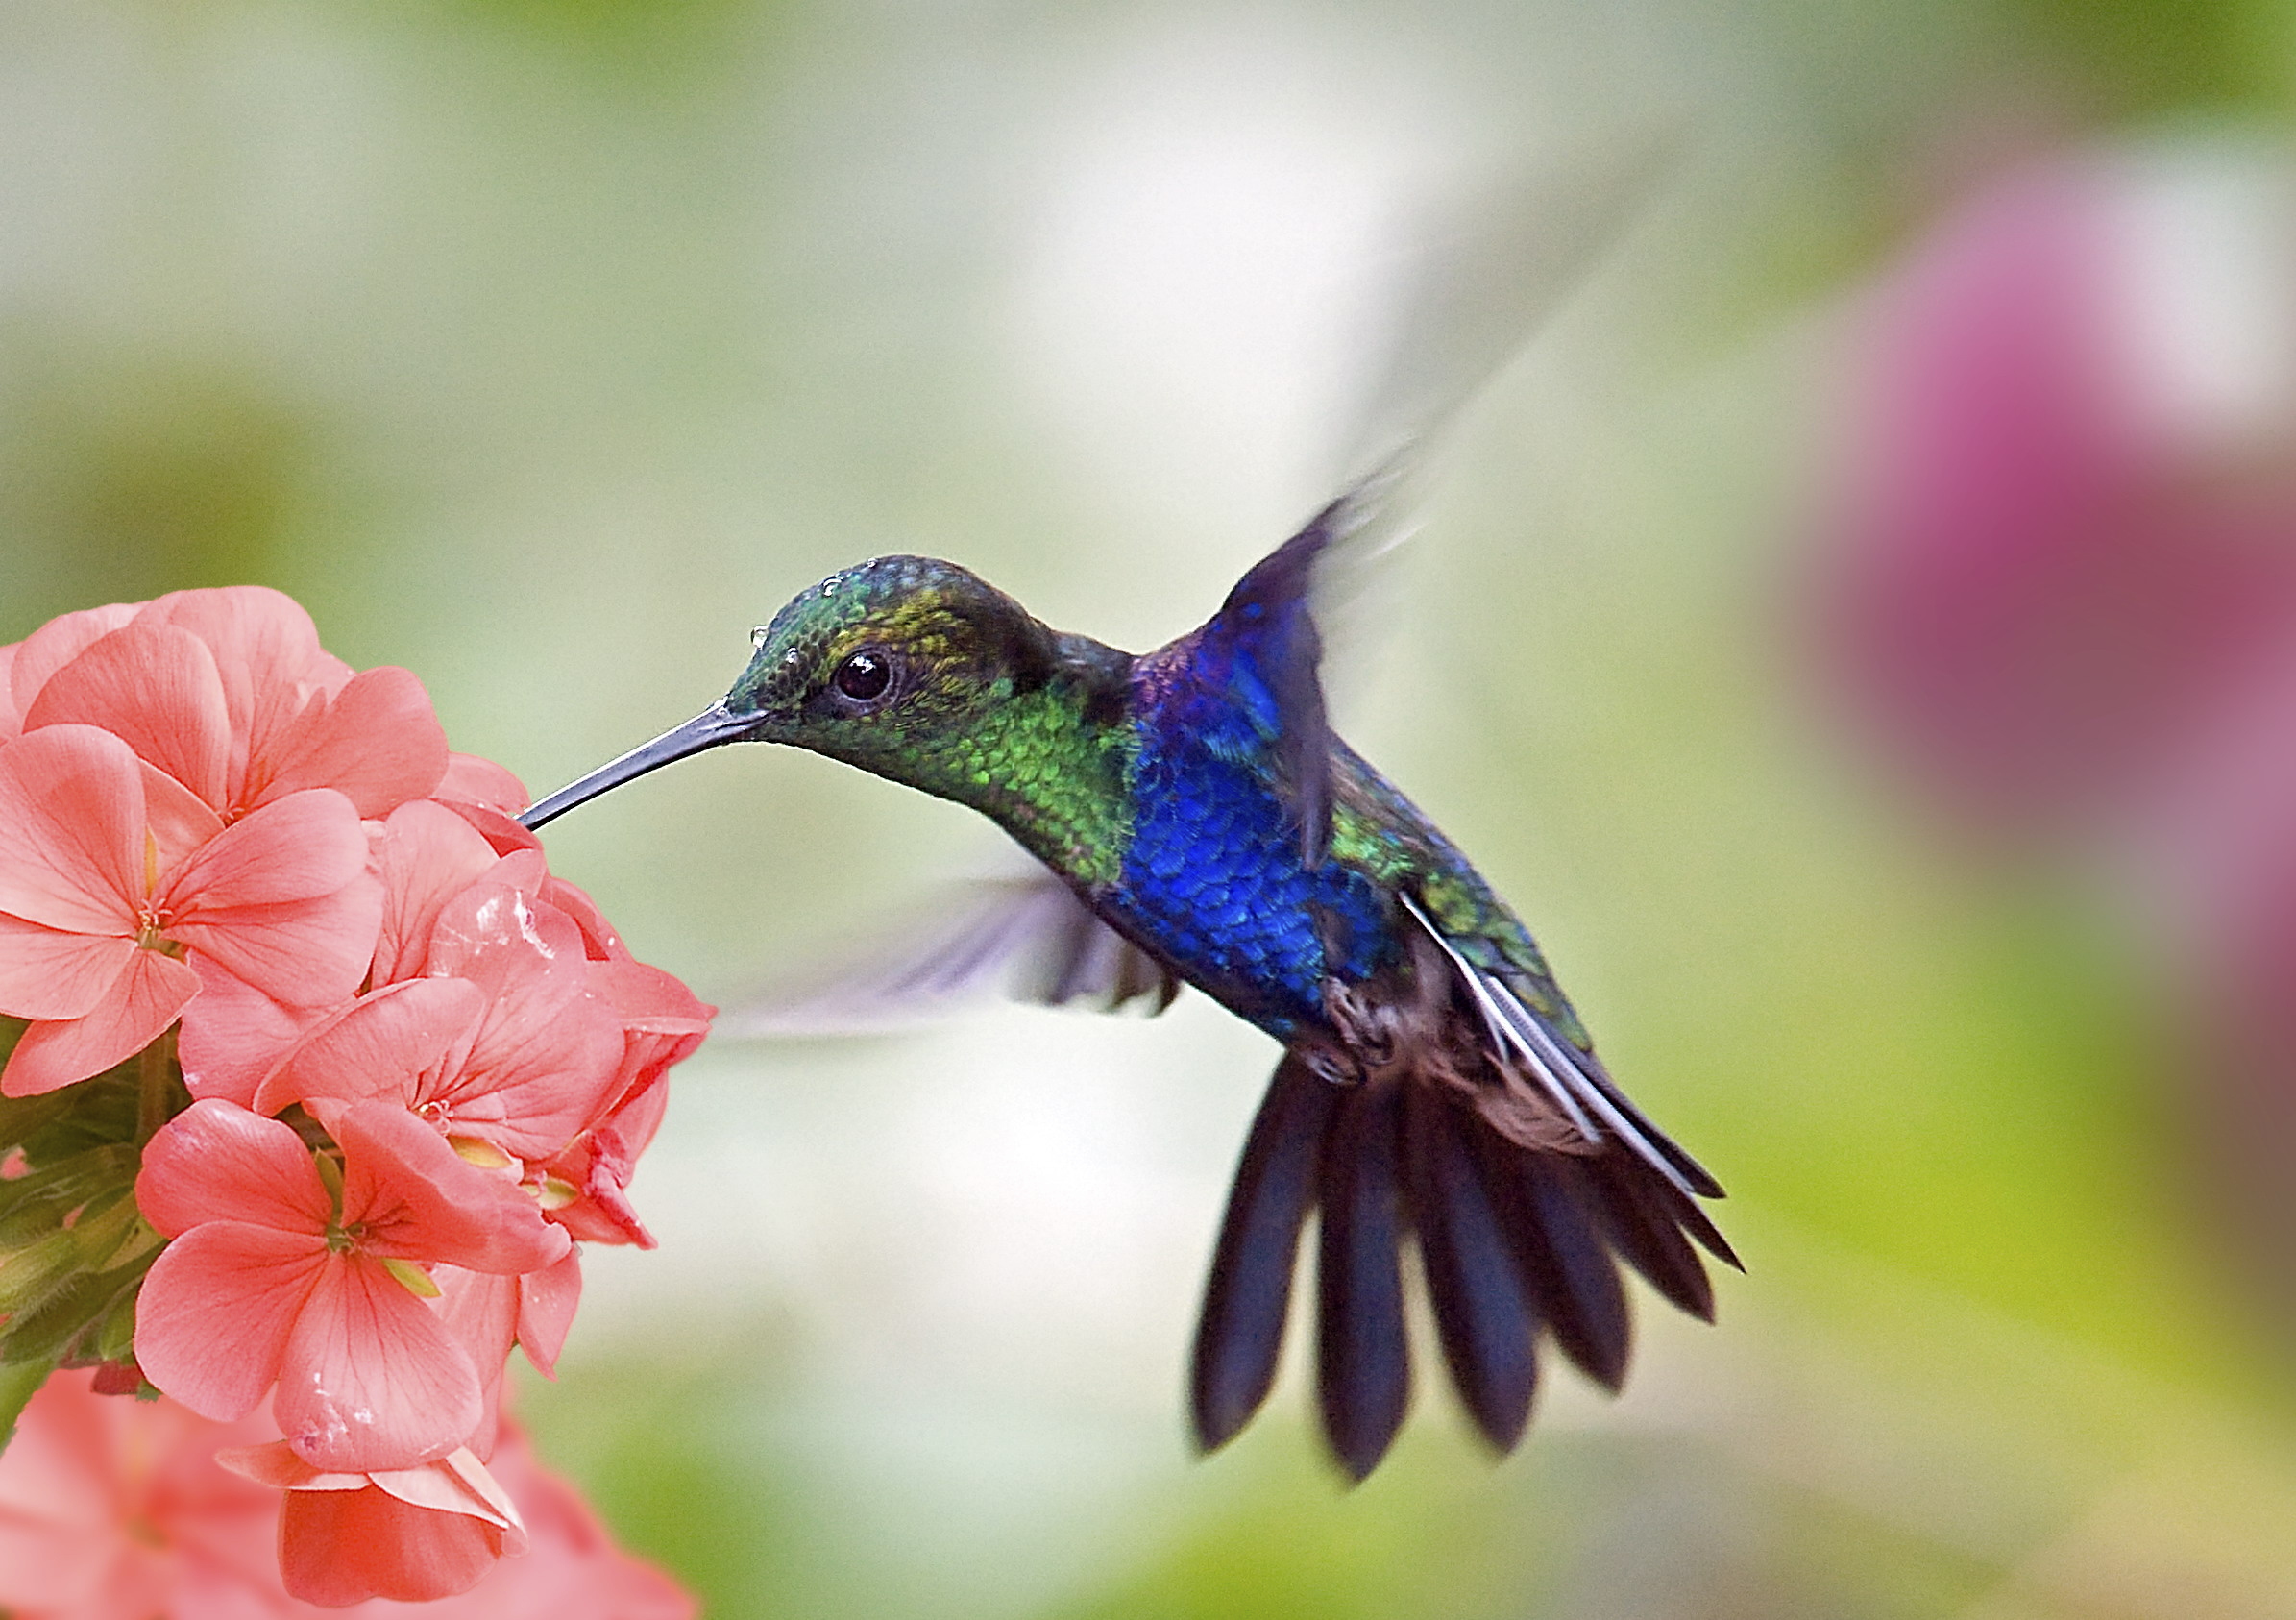 Facts about Hummingbirds and Google Hummingbird